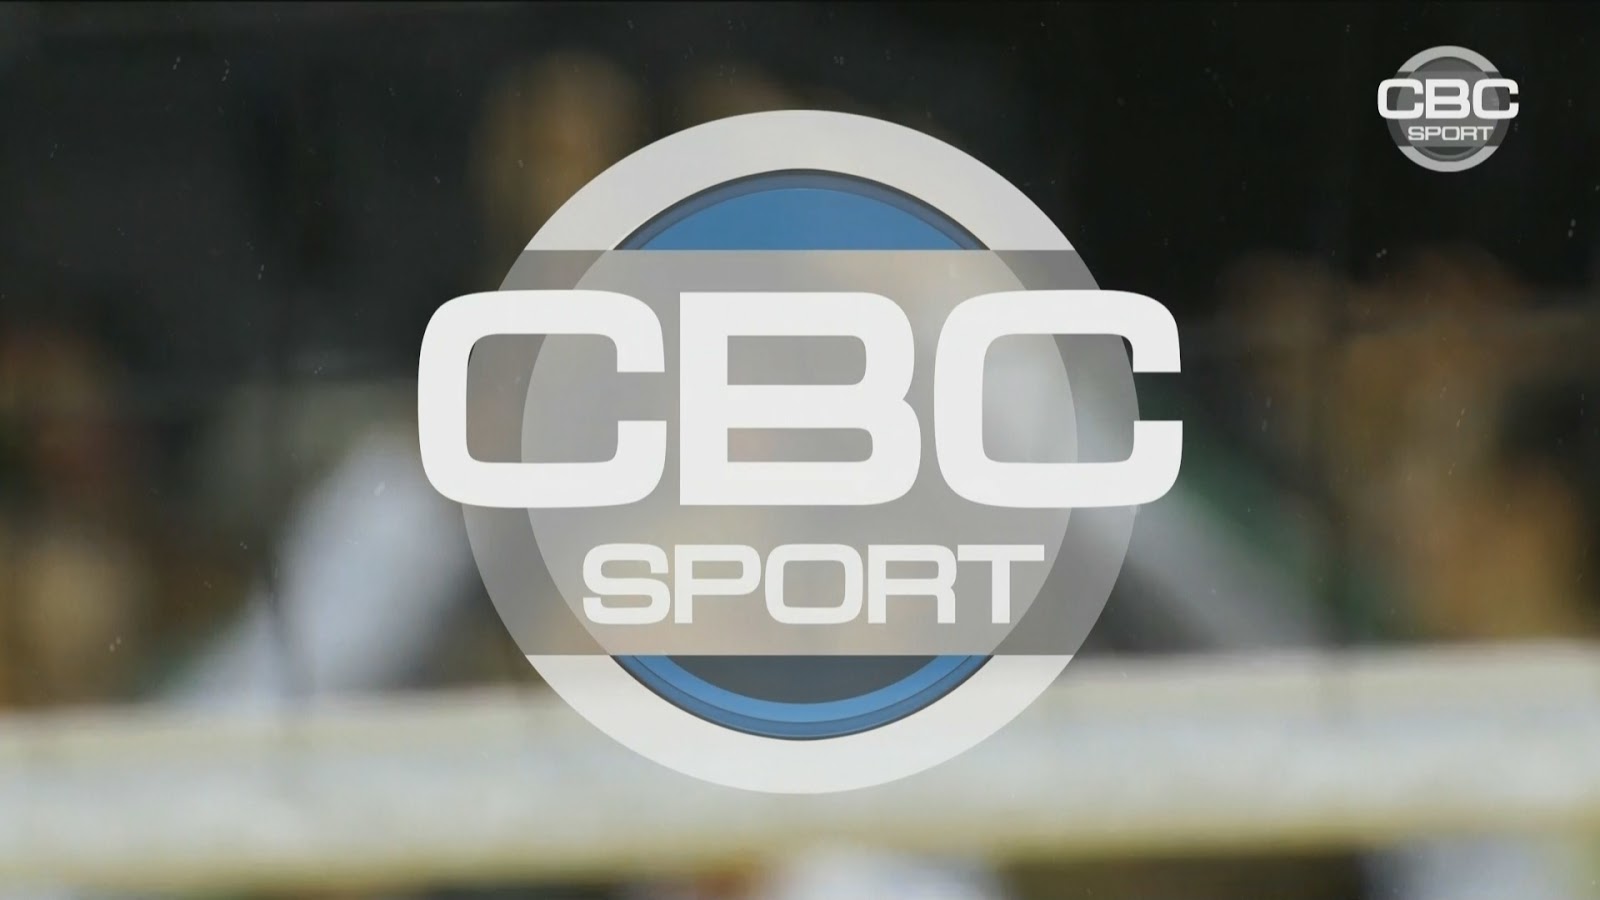 Канал CBC Sport. СВС Sport Canli. CBC Sport Canli. CBC Sport одежда. Cbs sport canli